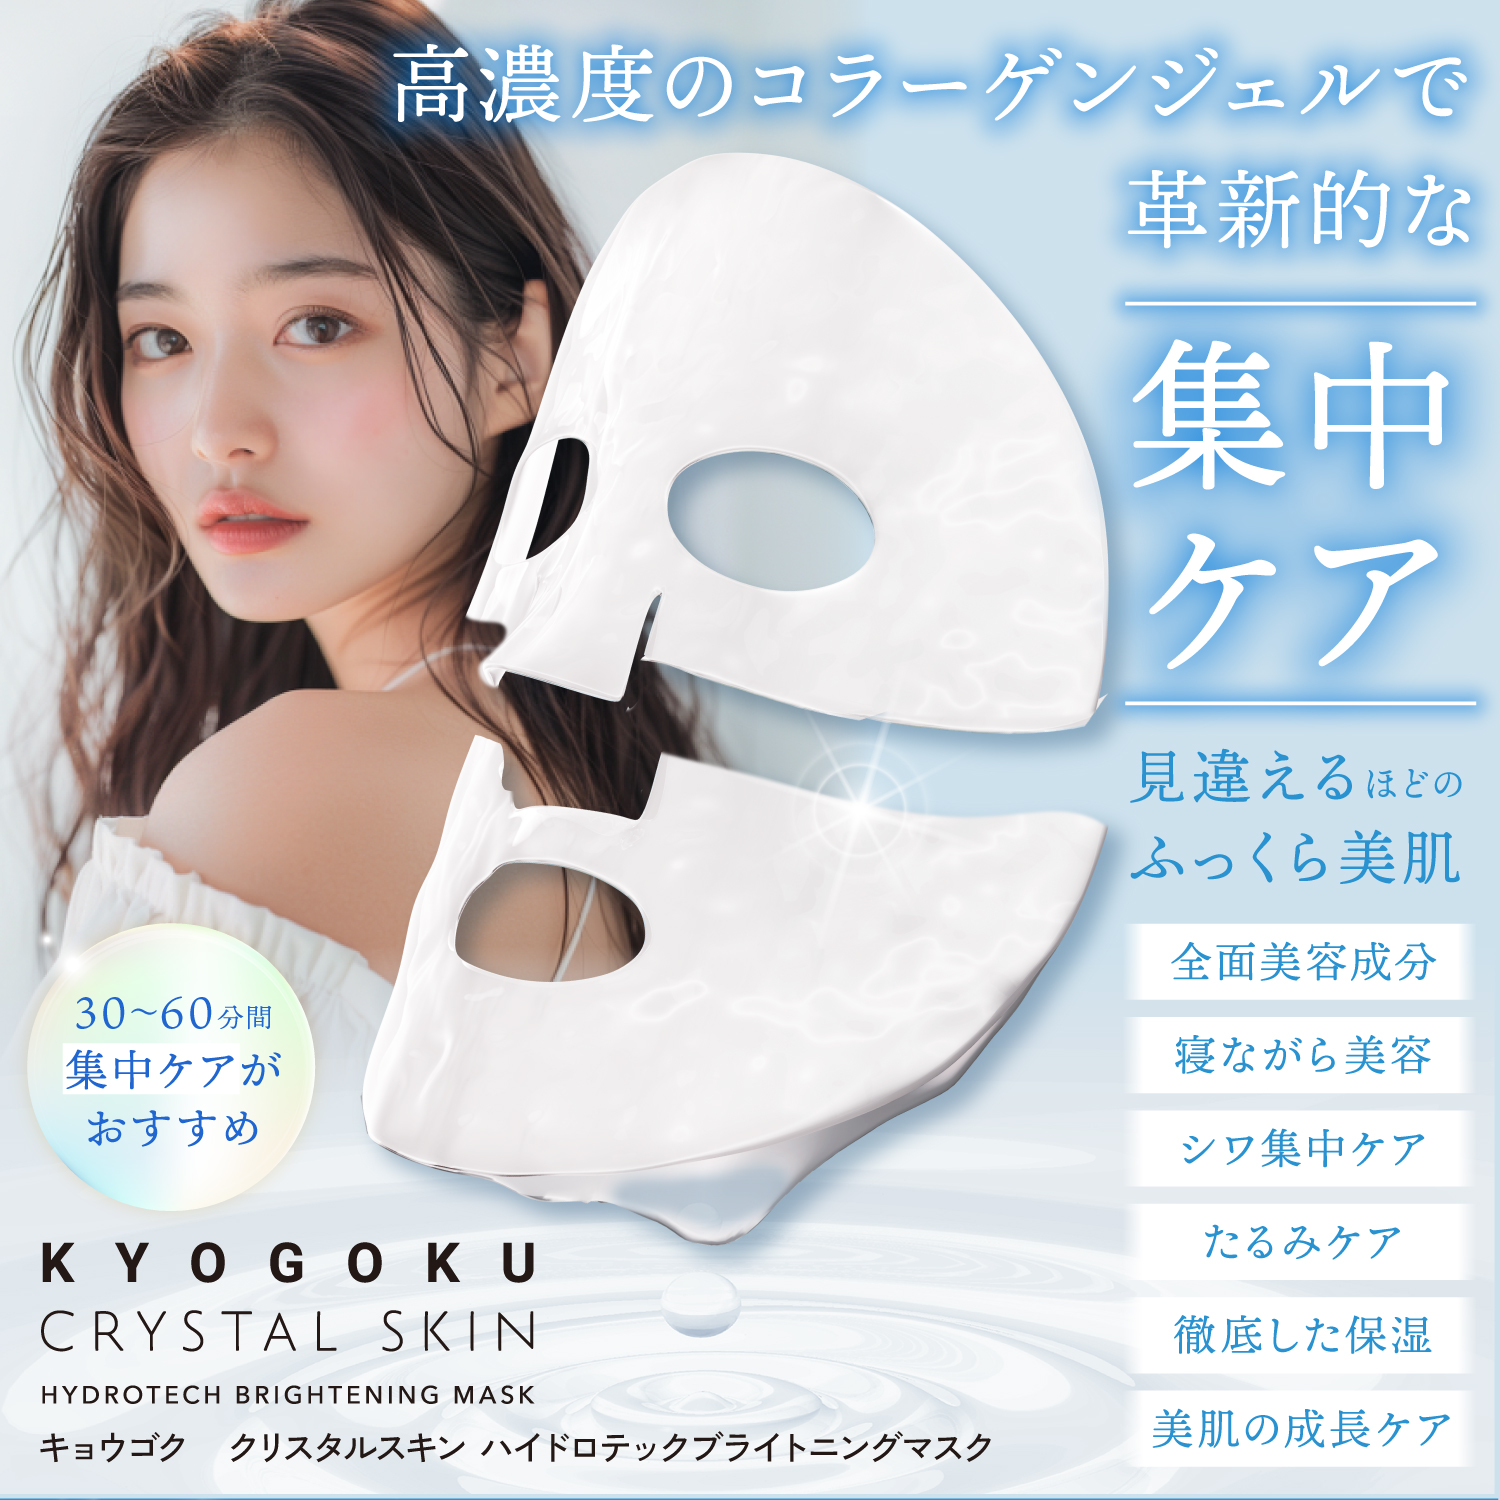 Kyogoku Professional / KYOGOKU クリスタルスキン ハイドロテックブライトニングマスク 美白